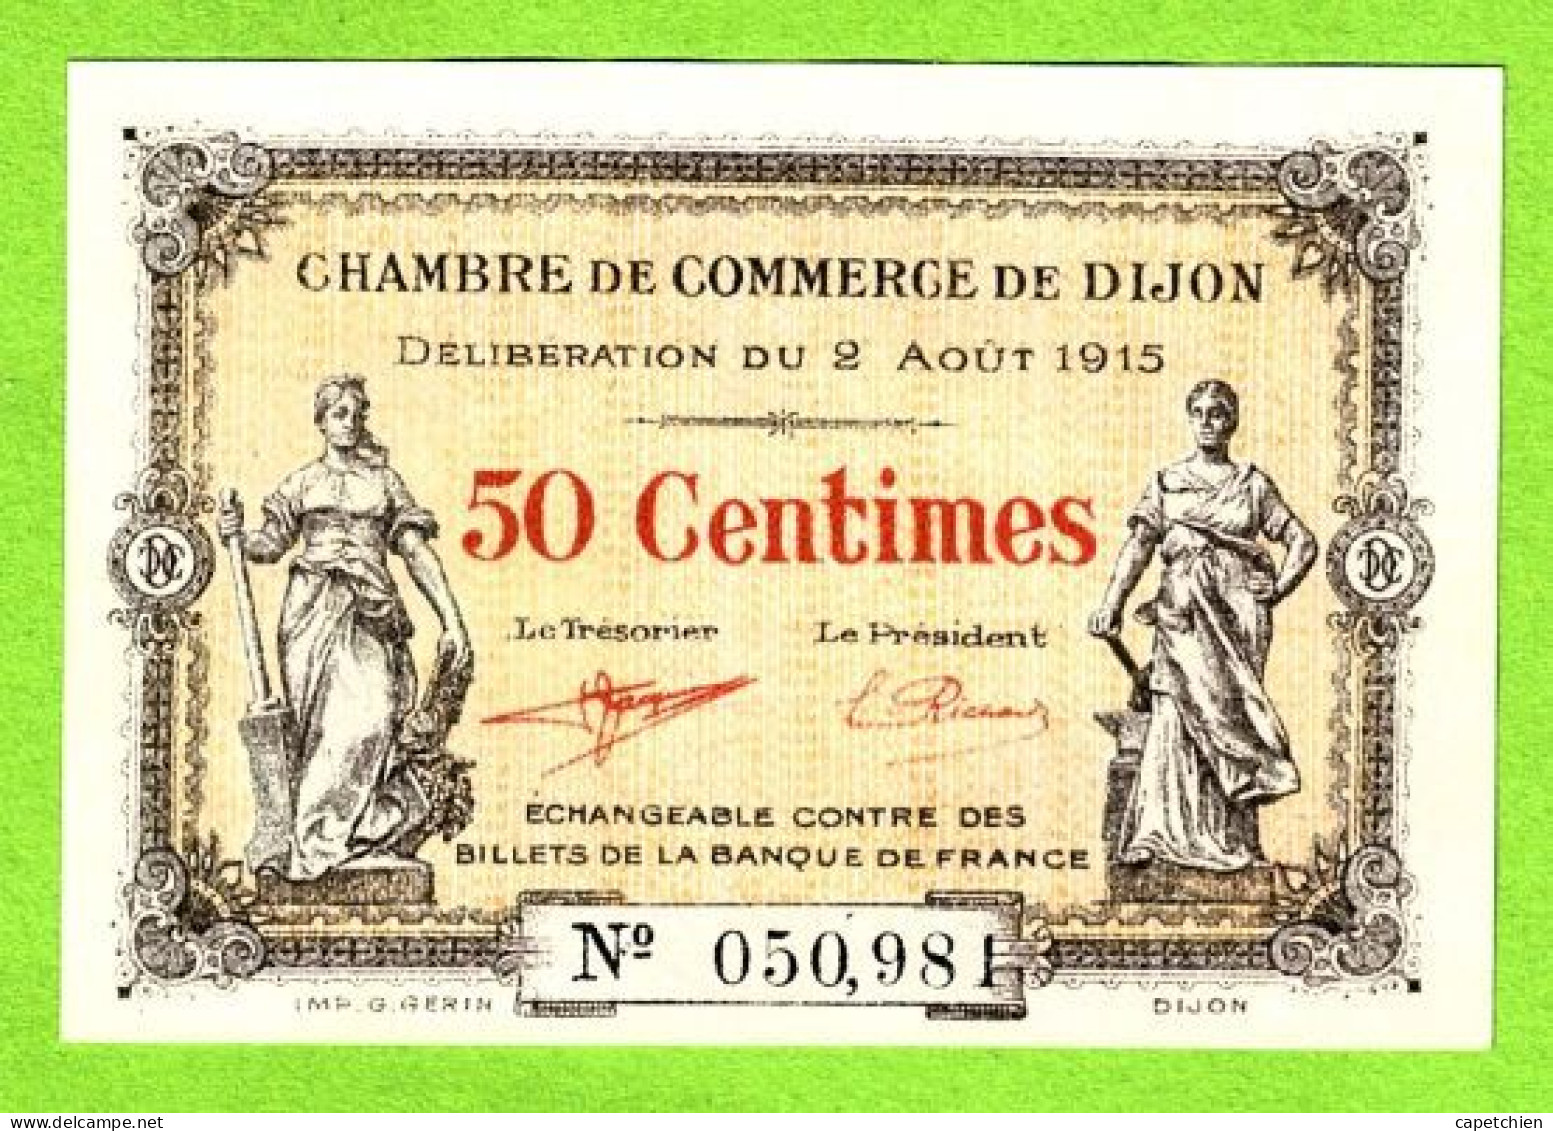 FRANCE / CHAMBRE De COMMERCE De DIJON/ 50 CENT. / 2 AOUT 1915 / N° 050,98 / SERIE - Chamber Of Commerce